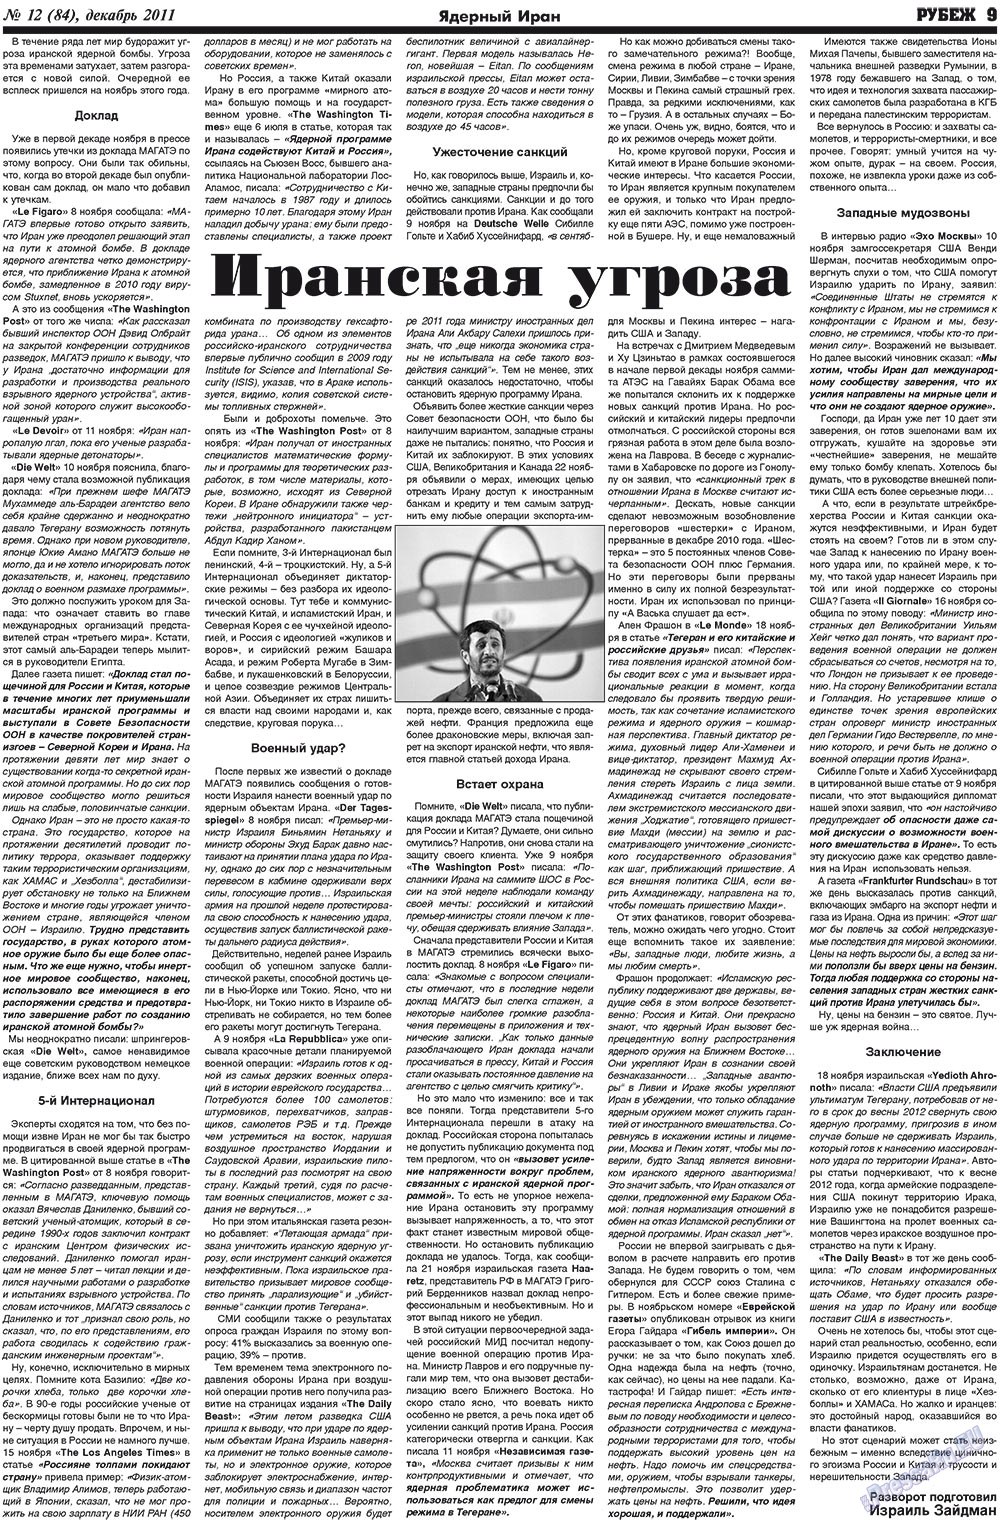 Рубеж, газета. 2011 №12 стр.9